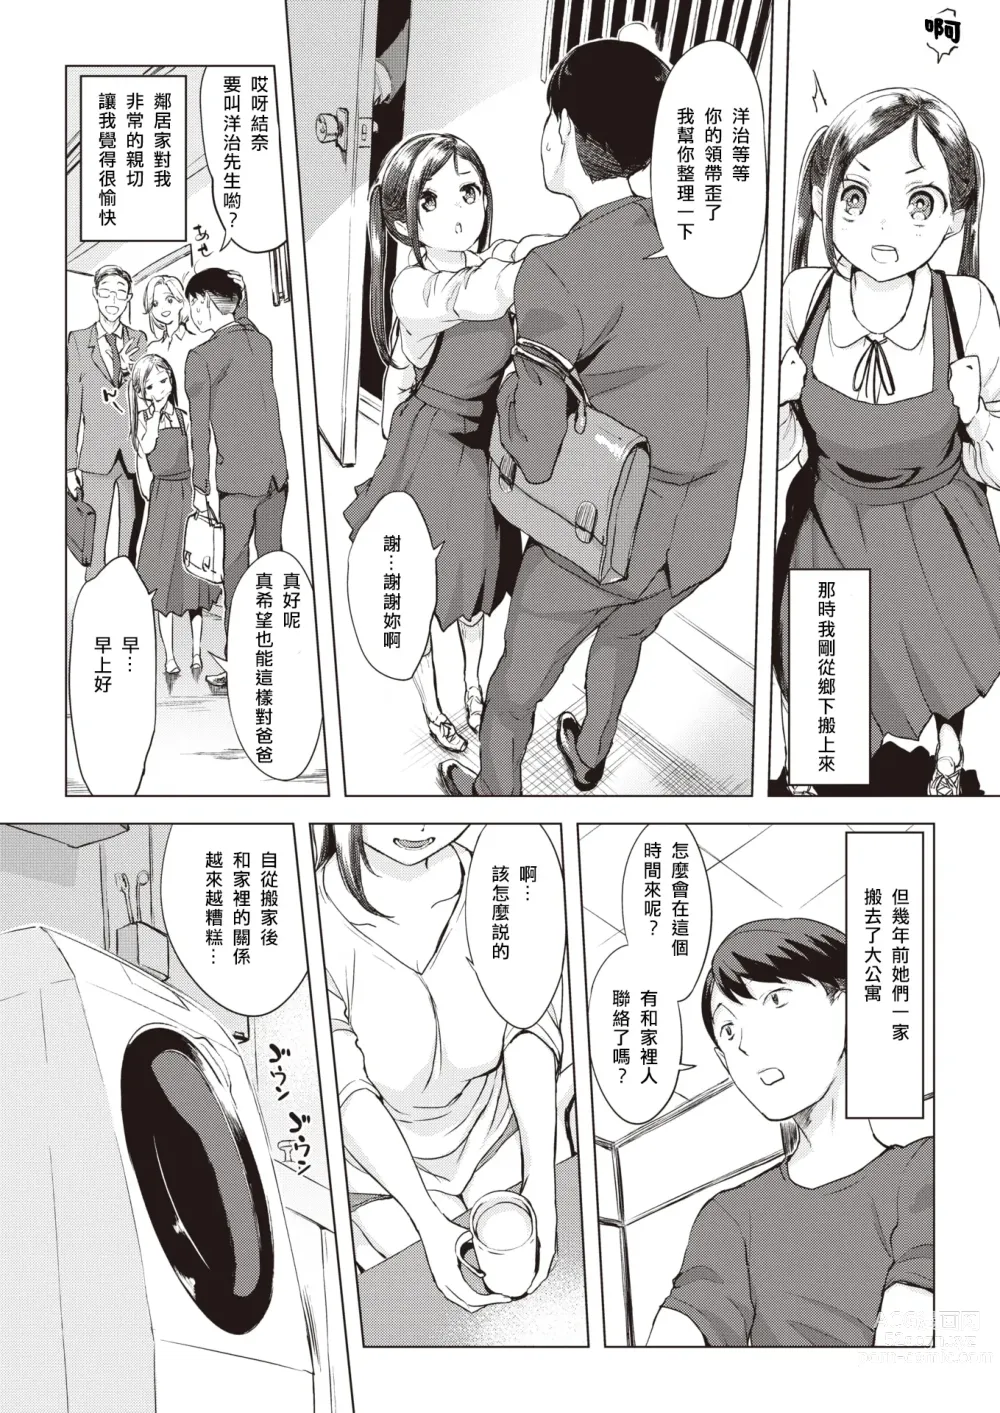 Page 3 of manga Ame no Yoru ni…